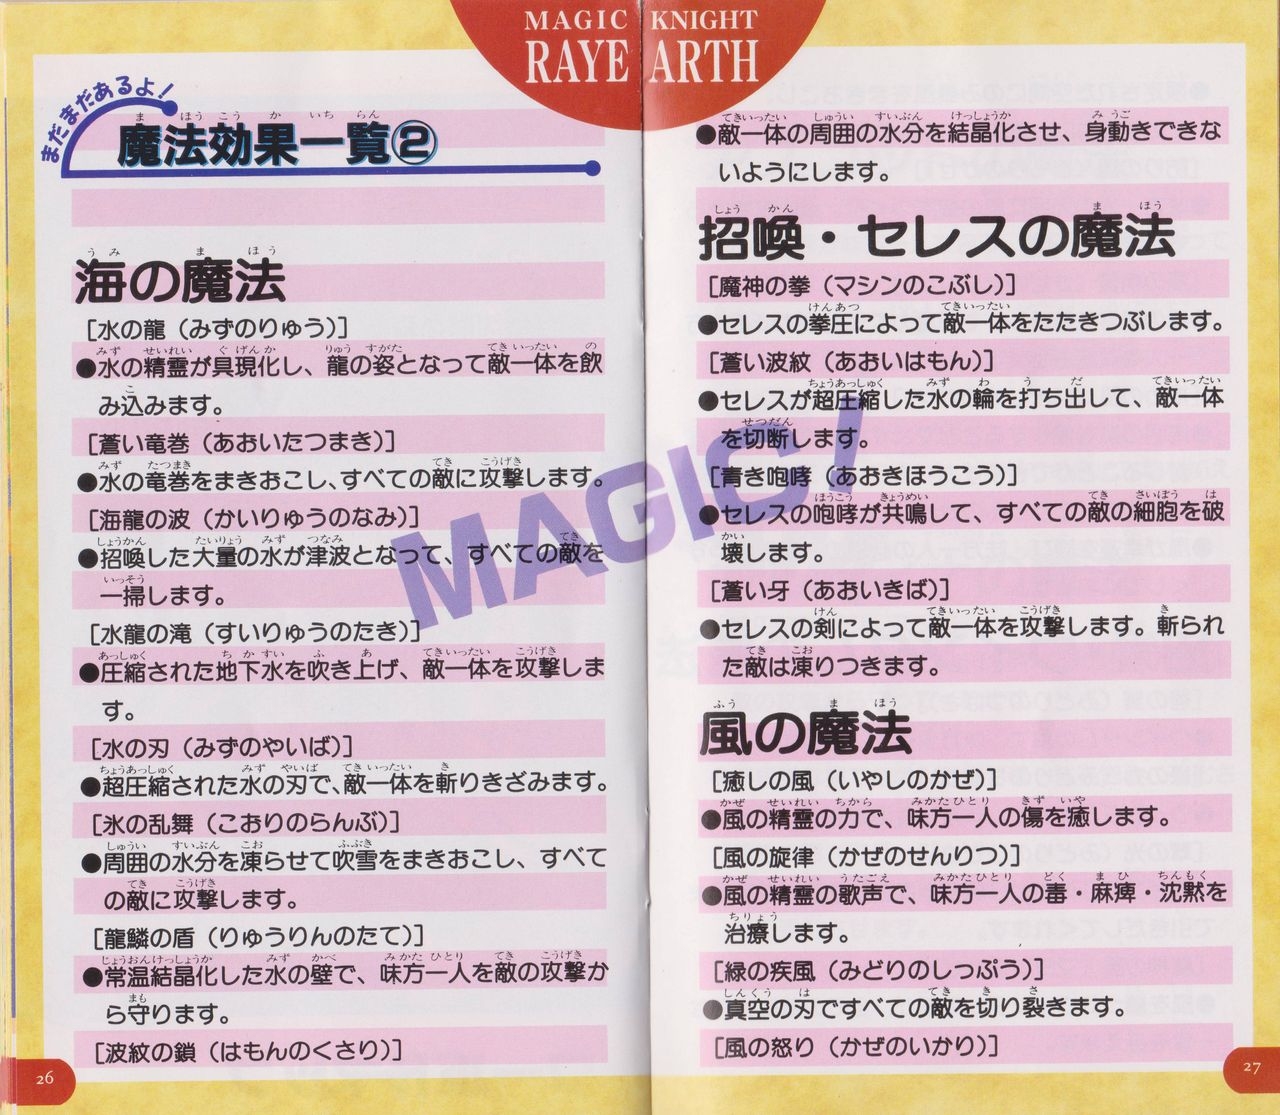 Magic Knight Rayearth - Box & Manual Scans [Super Famicom] 16